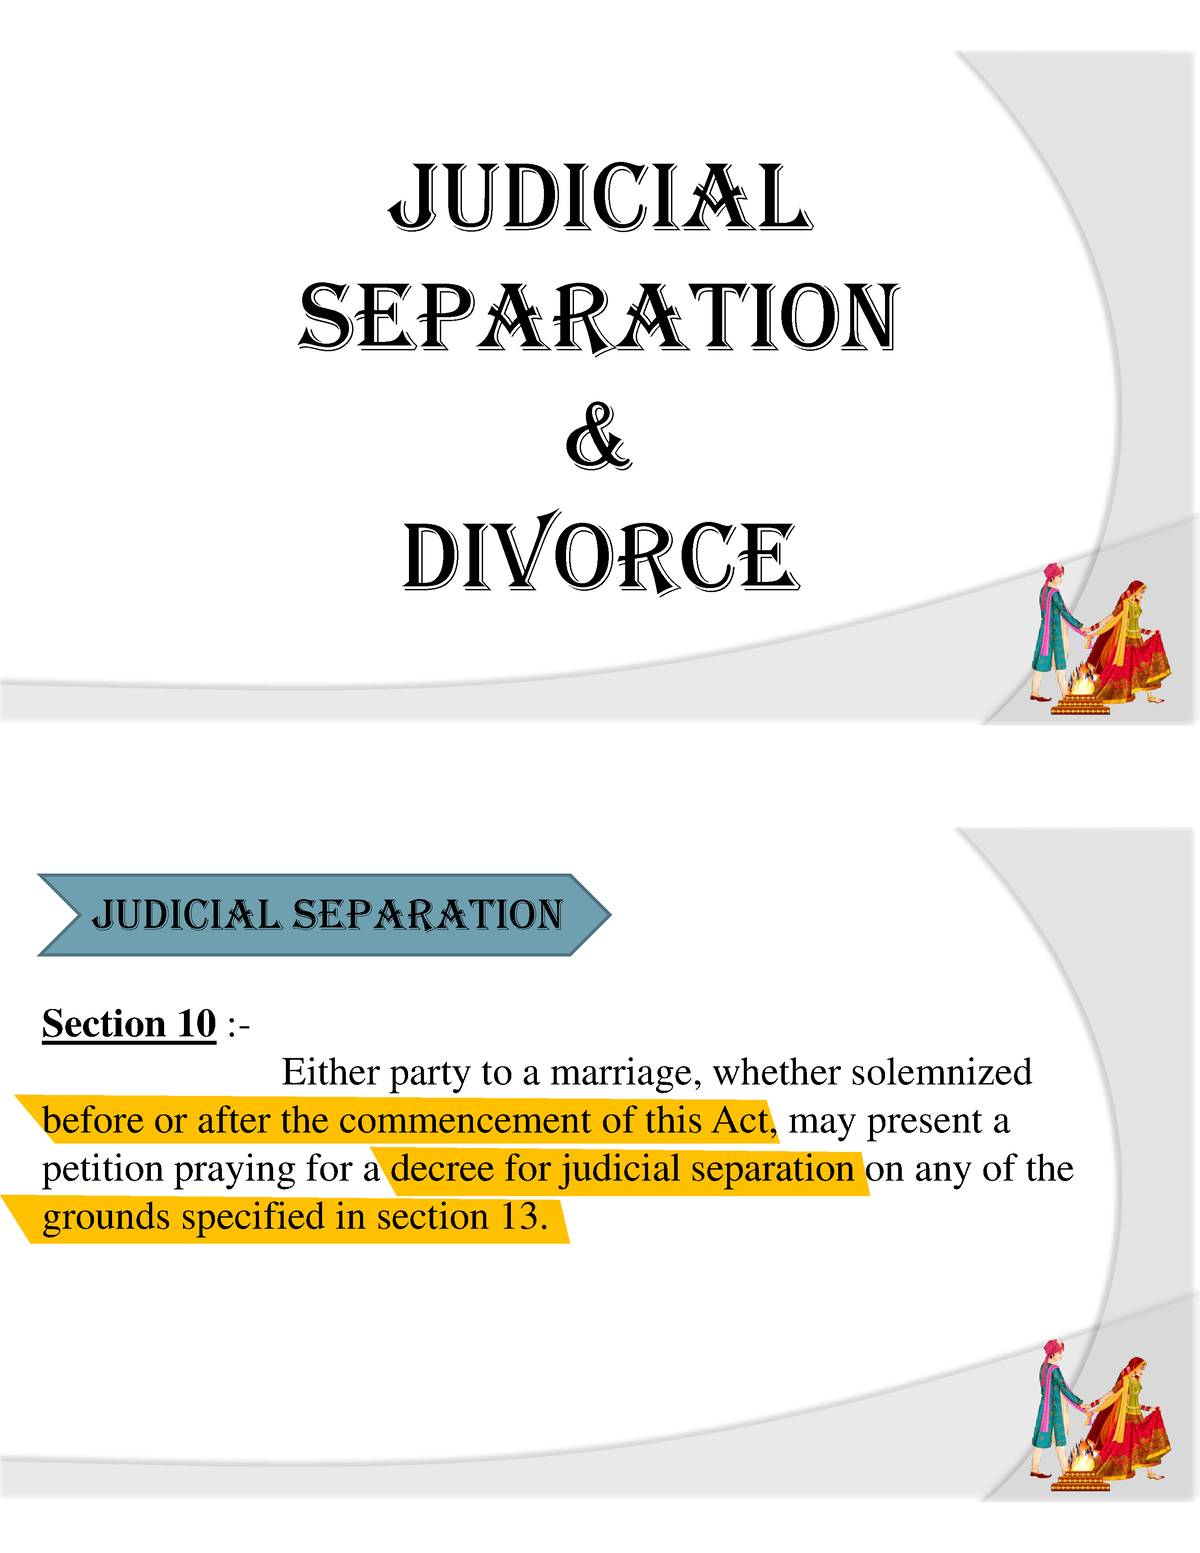 case study of judicial separation